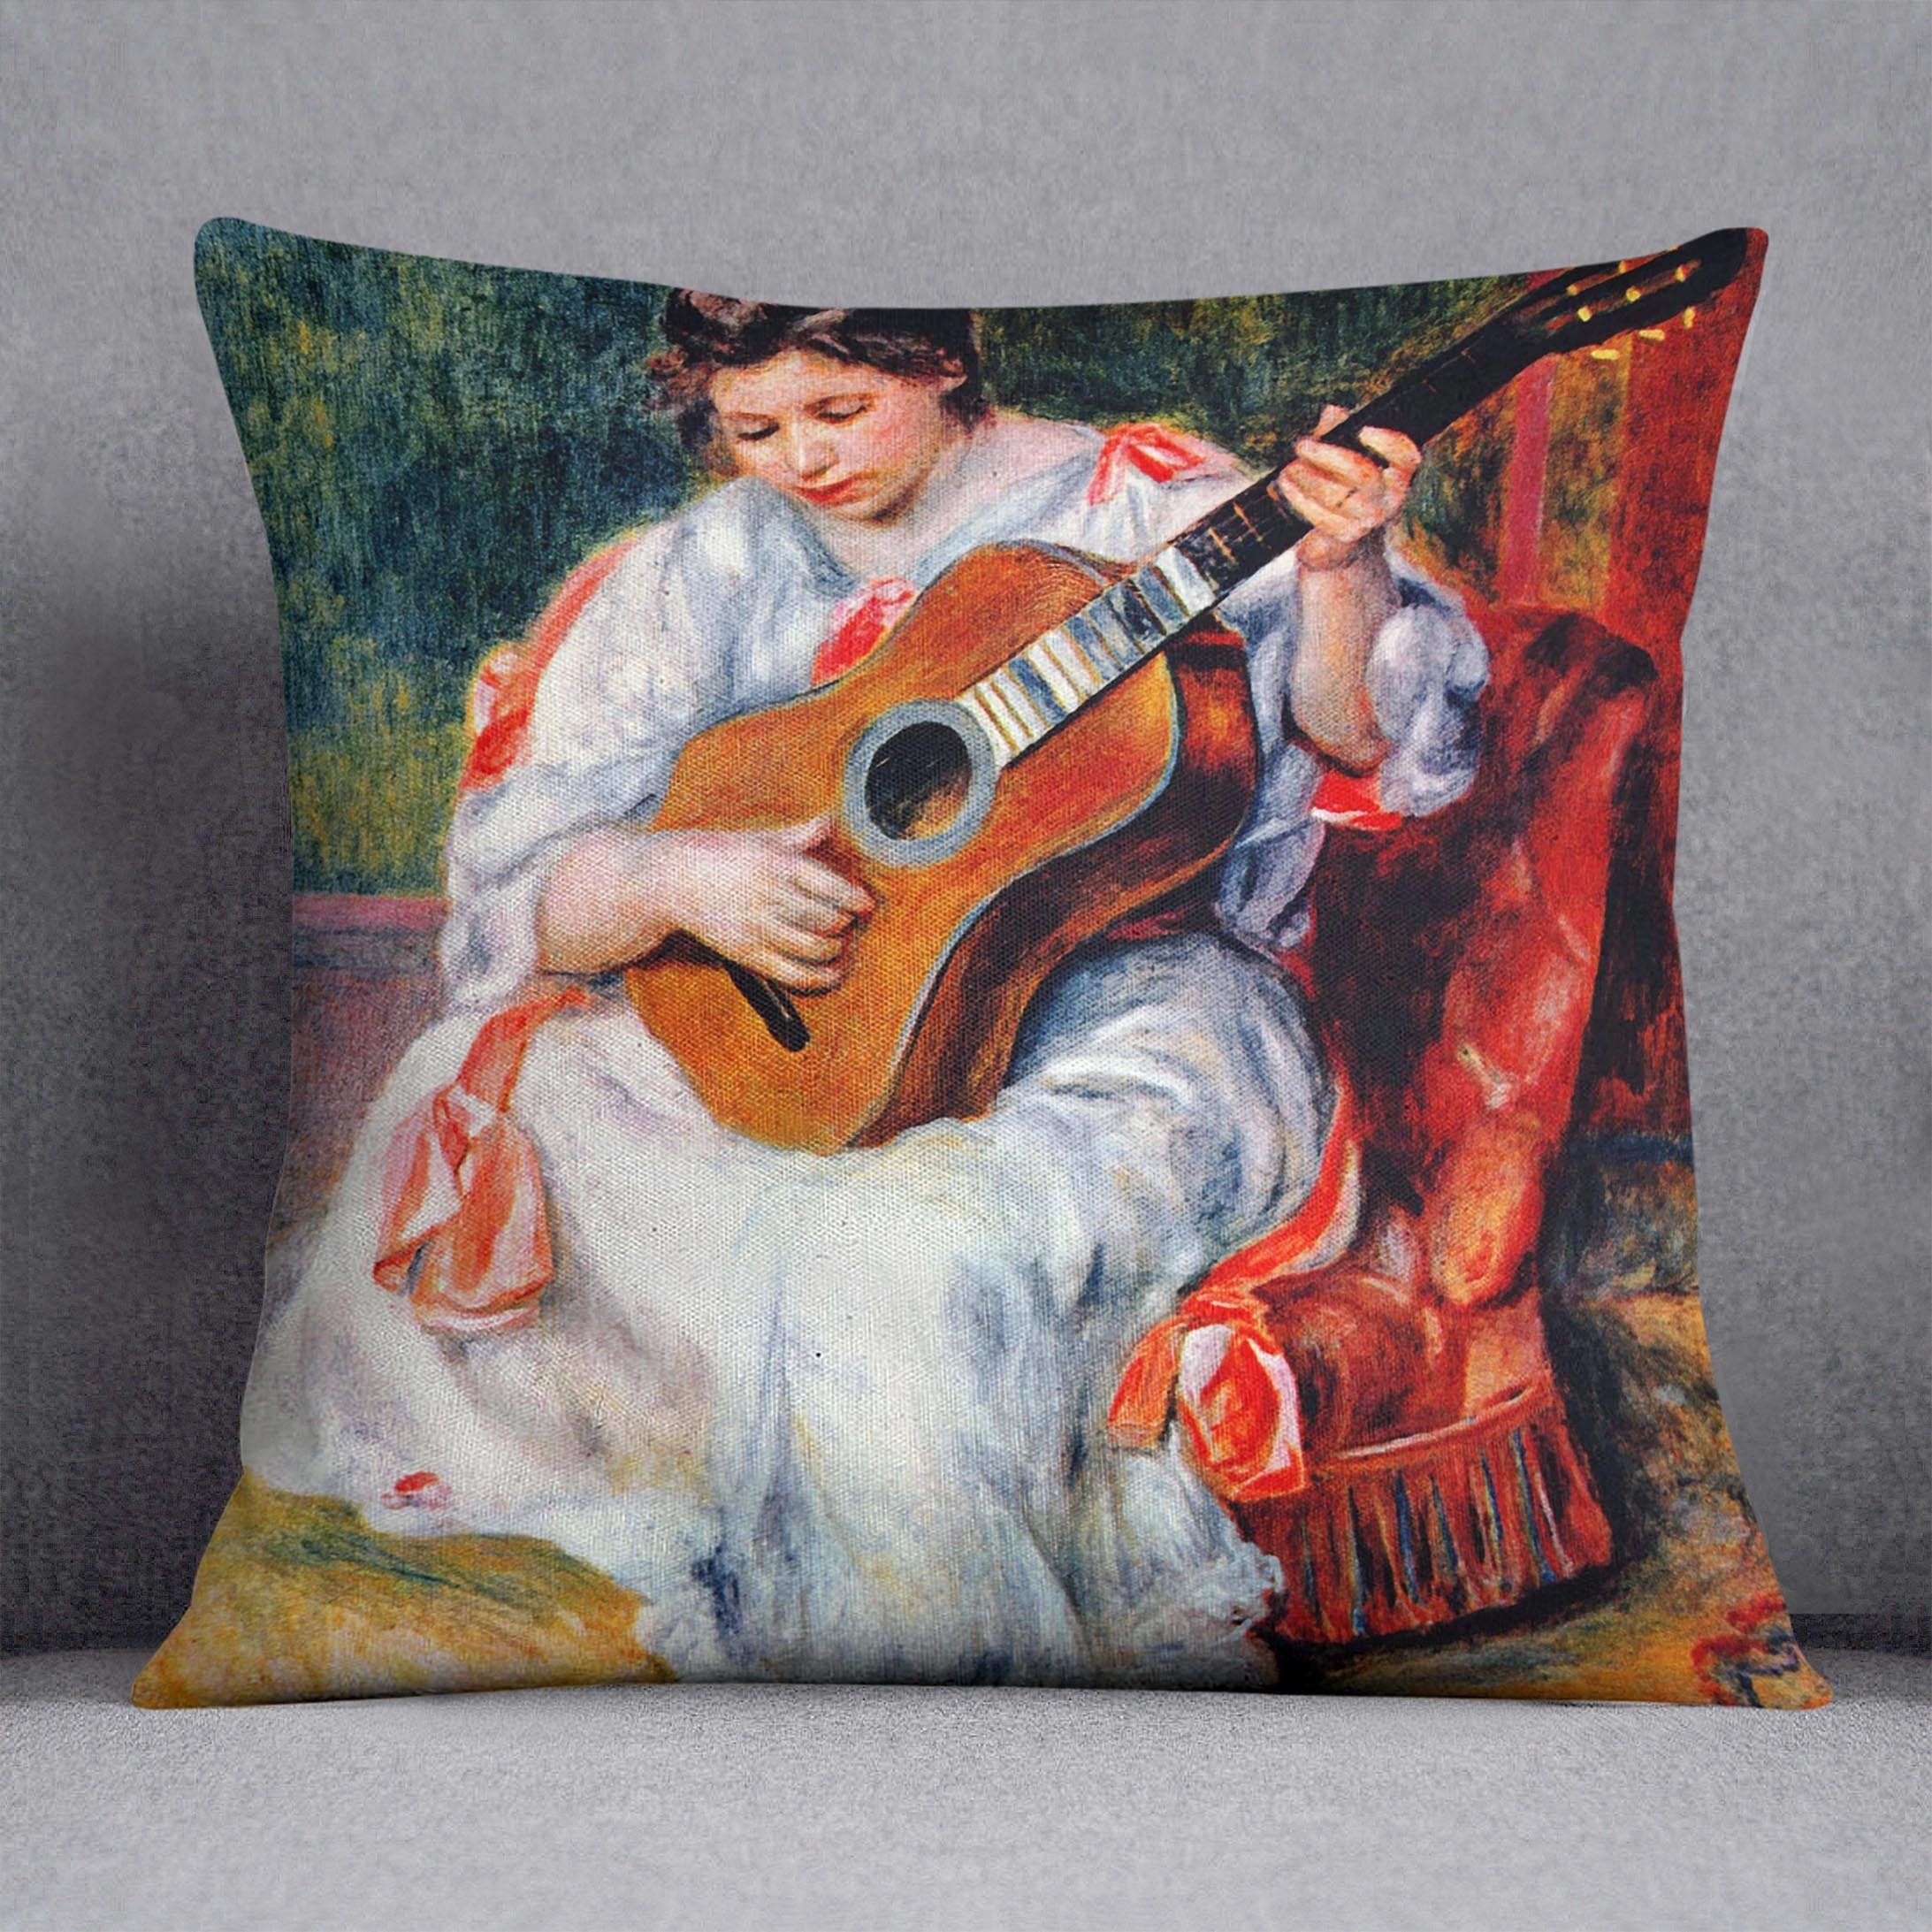 Guitarist by Renoir Throw Pillow